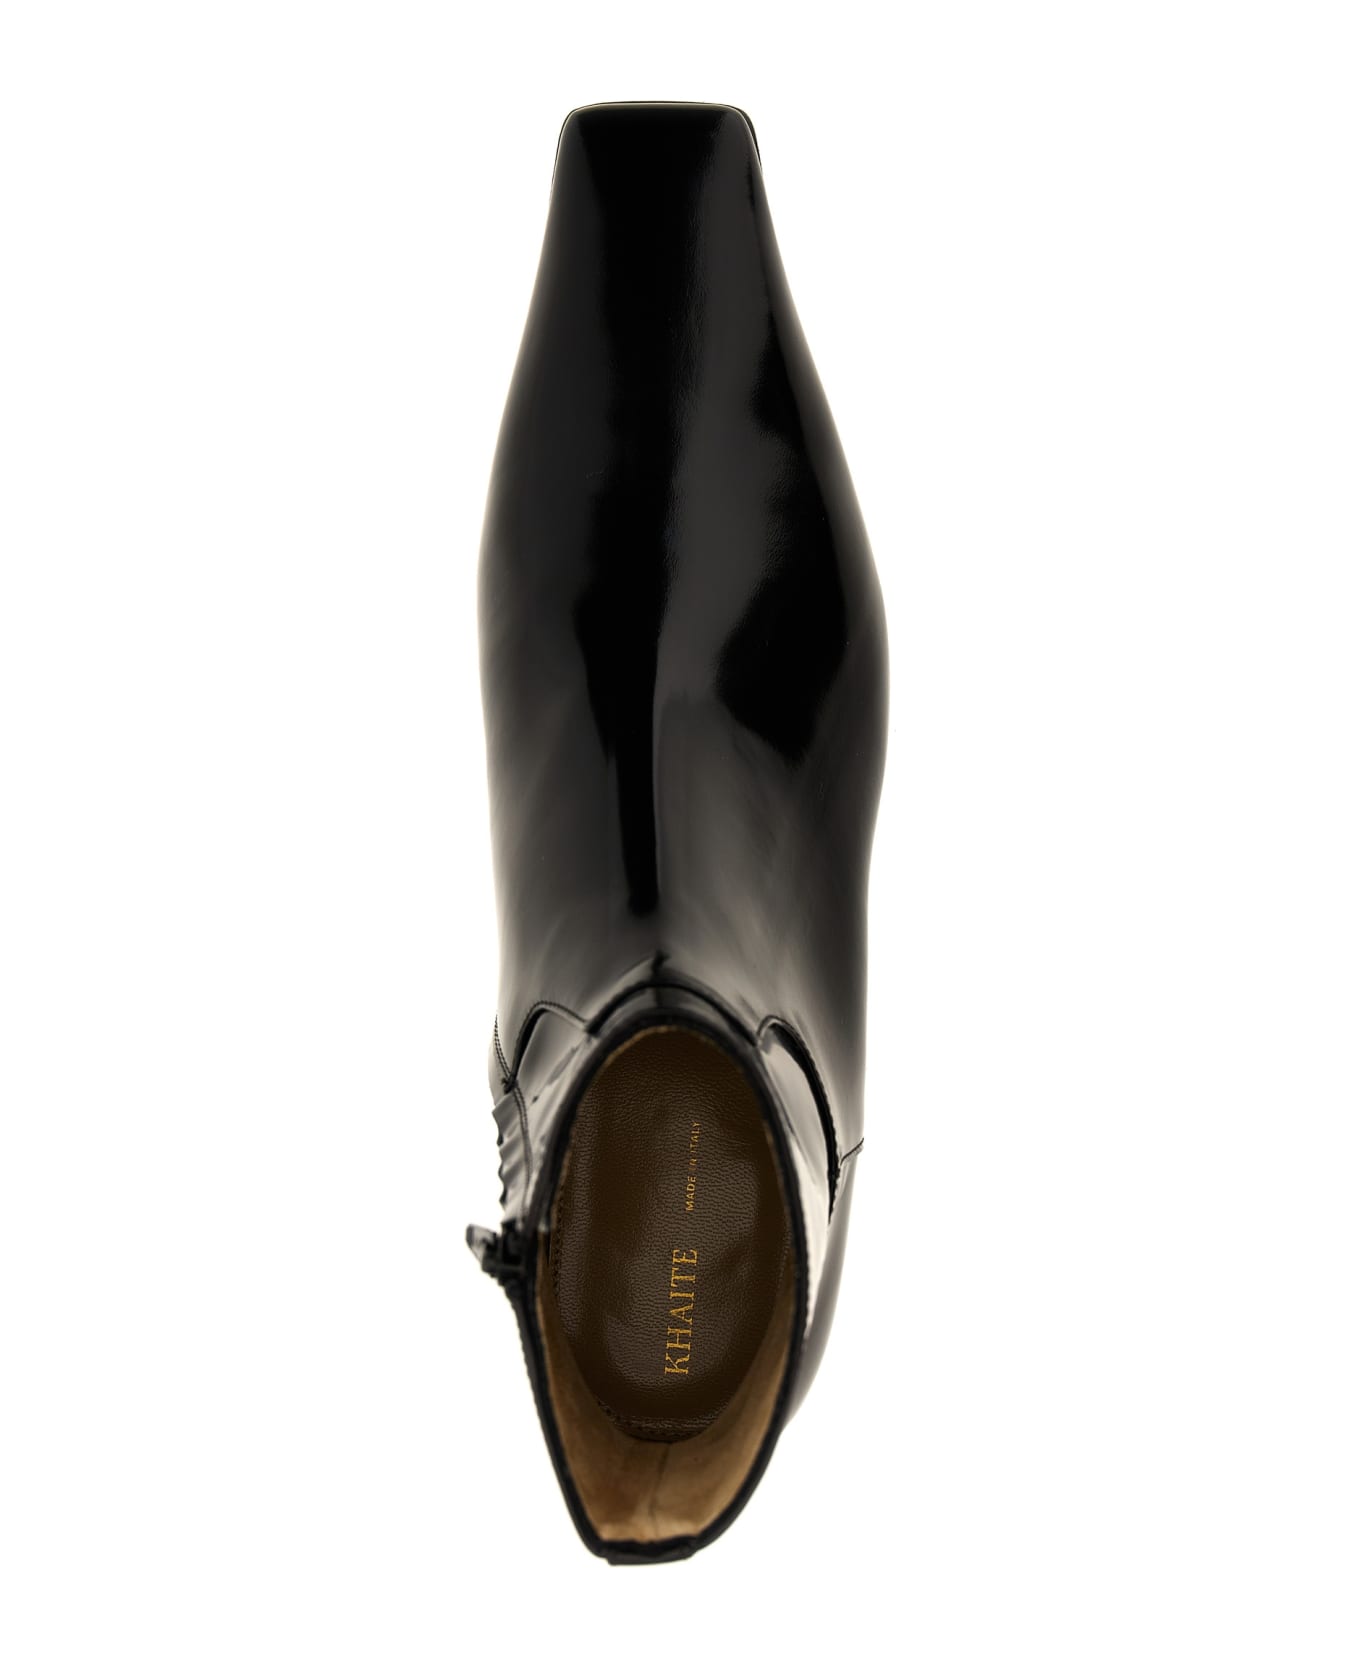 Khaite 'marfa' Ankle Boots - Black   ブーツ